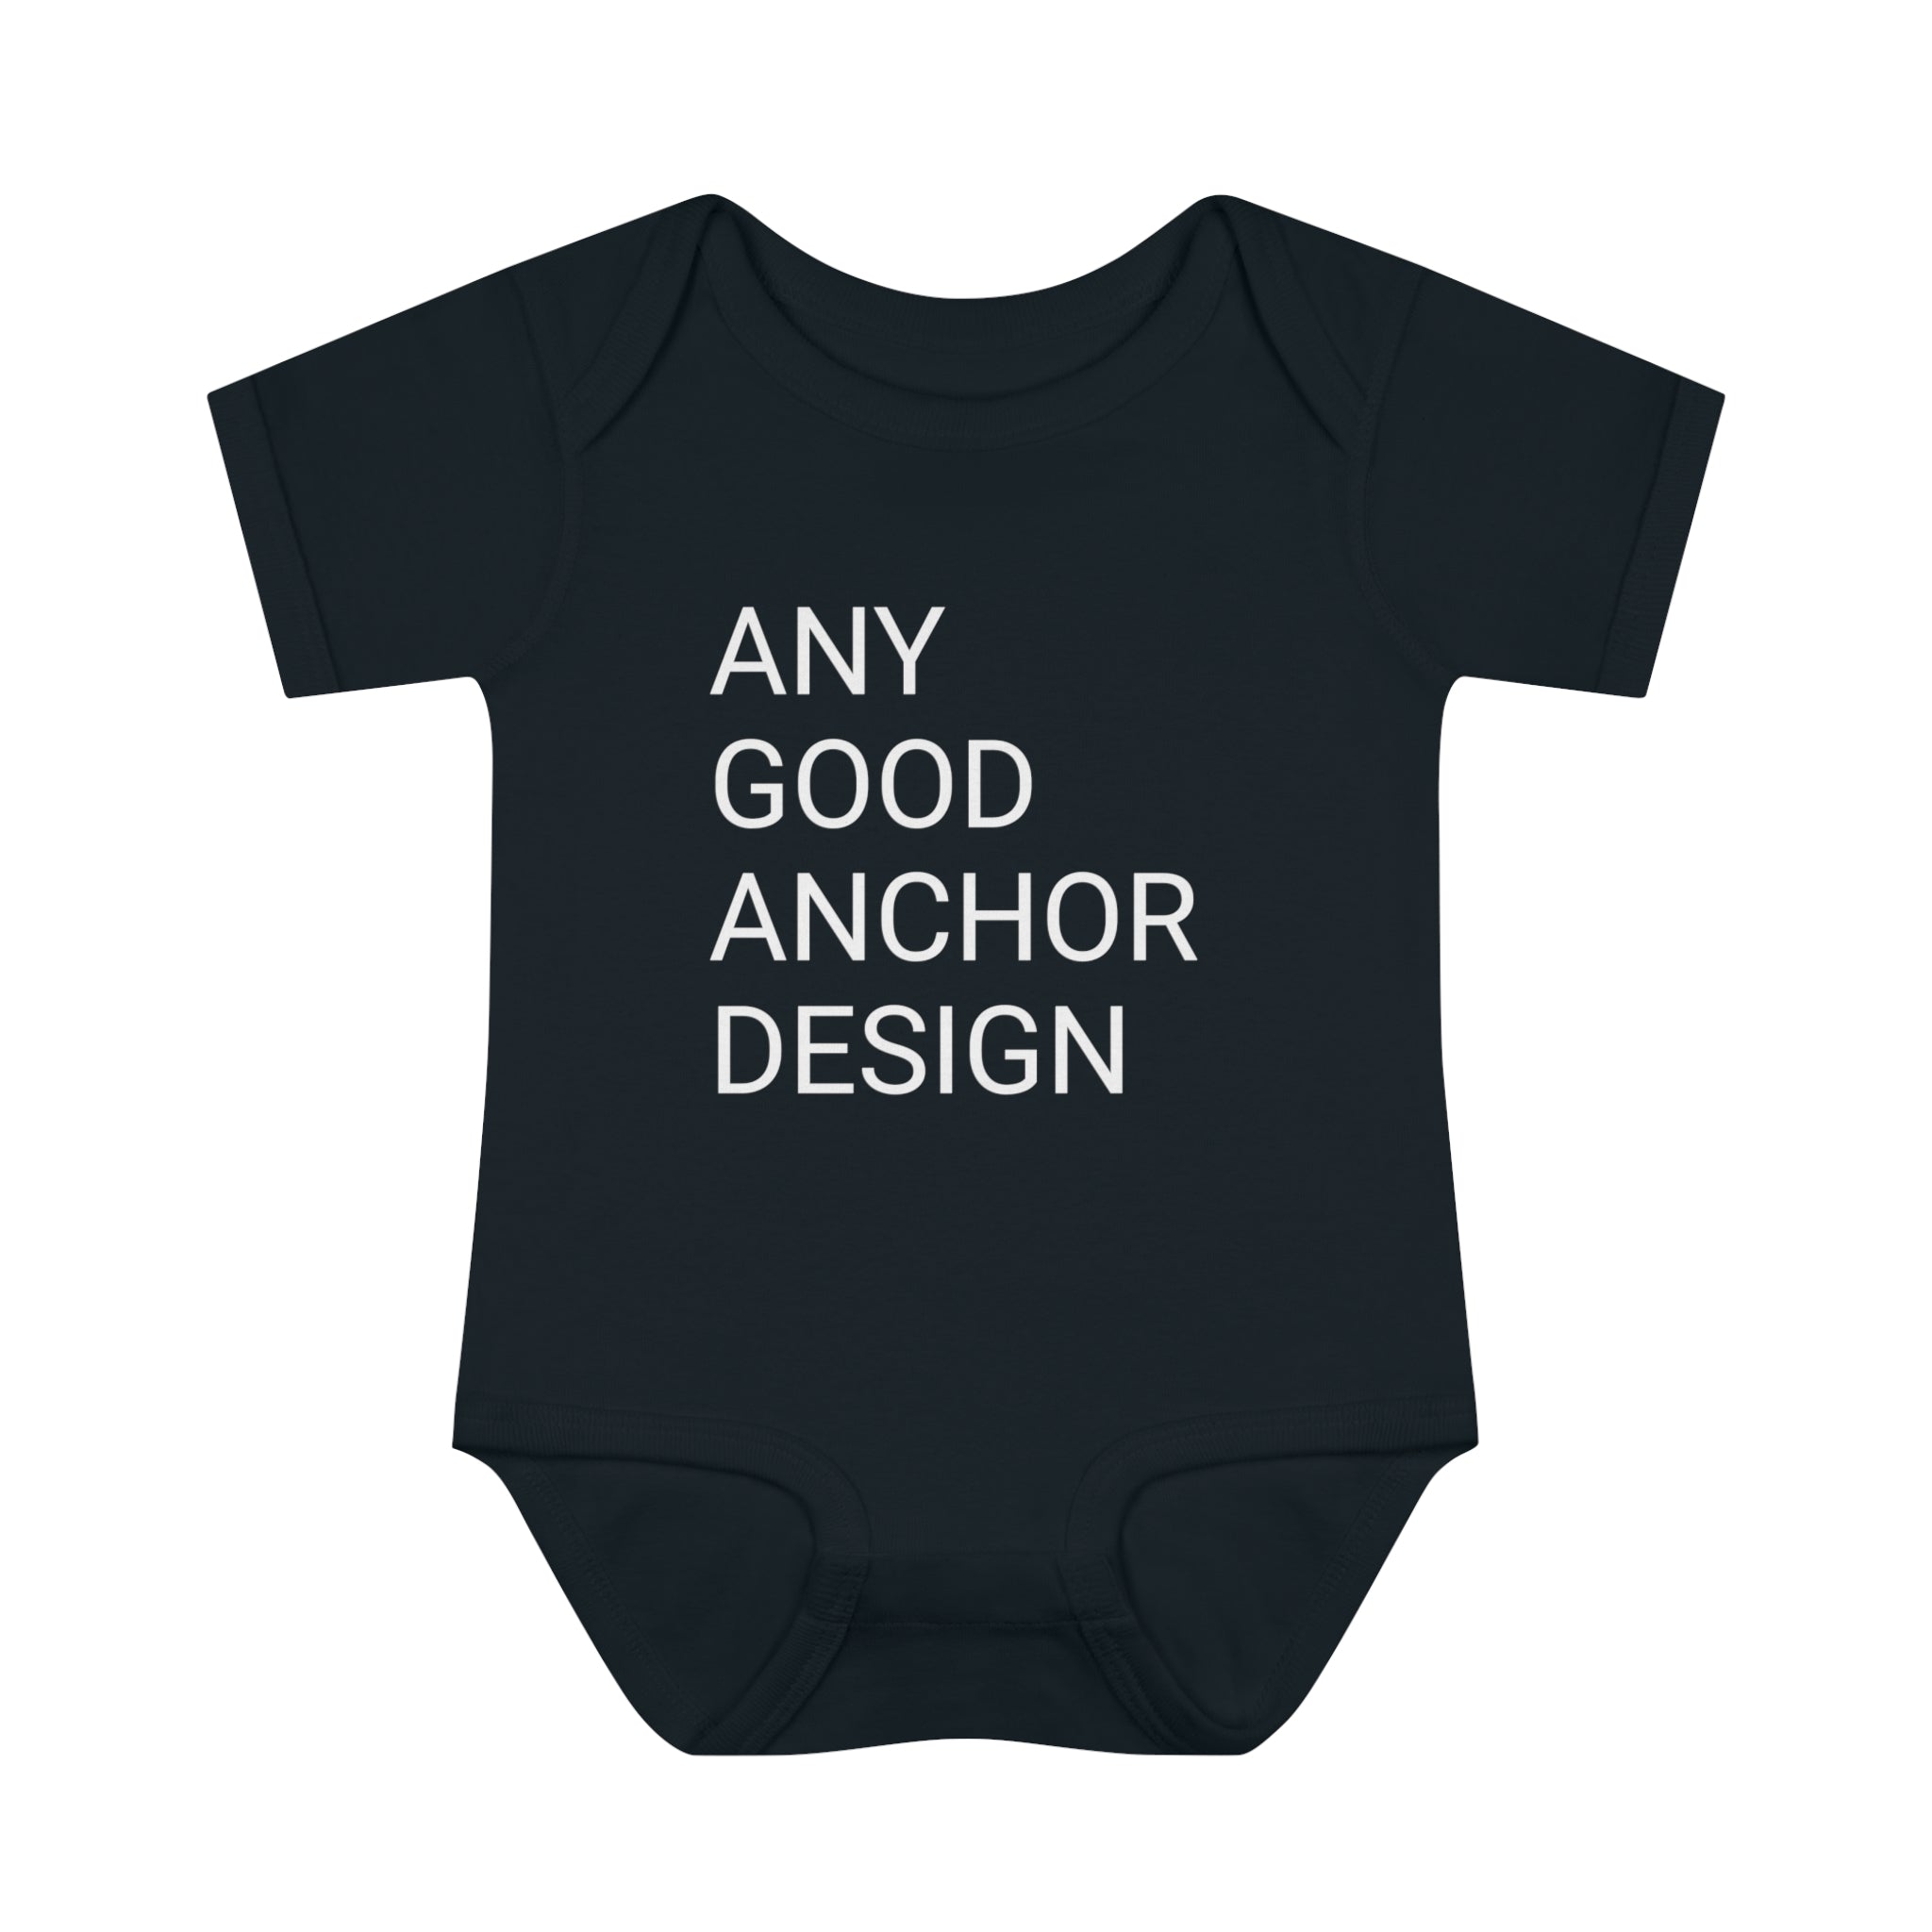 Baby Onesie NB-12M - Any Good Anchor Design